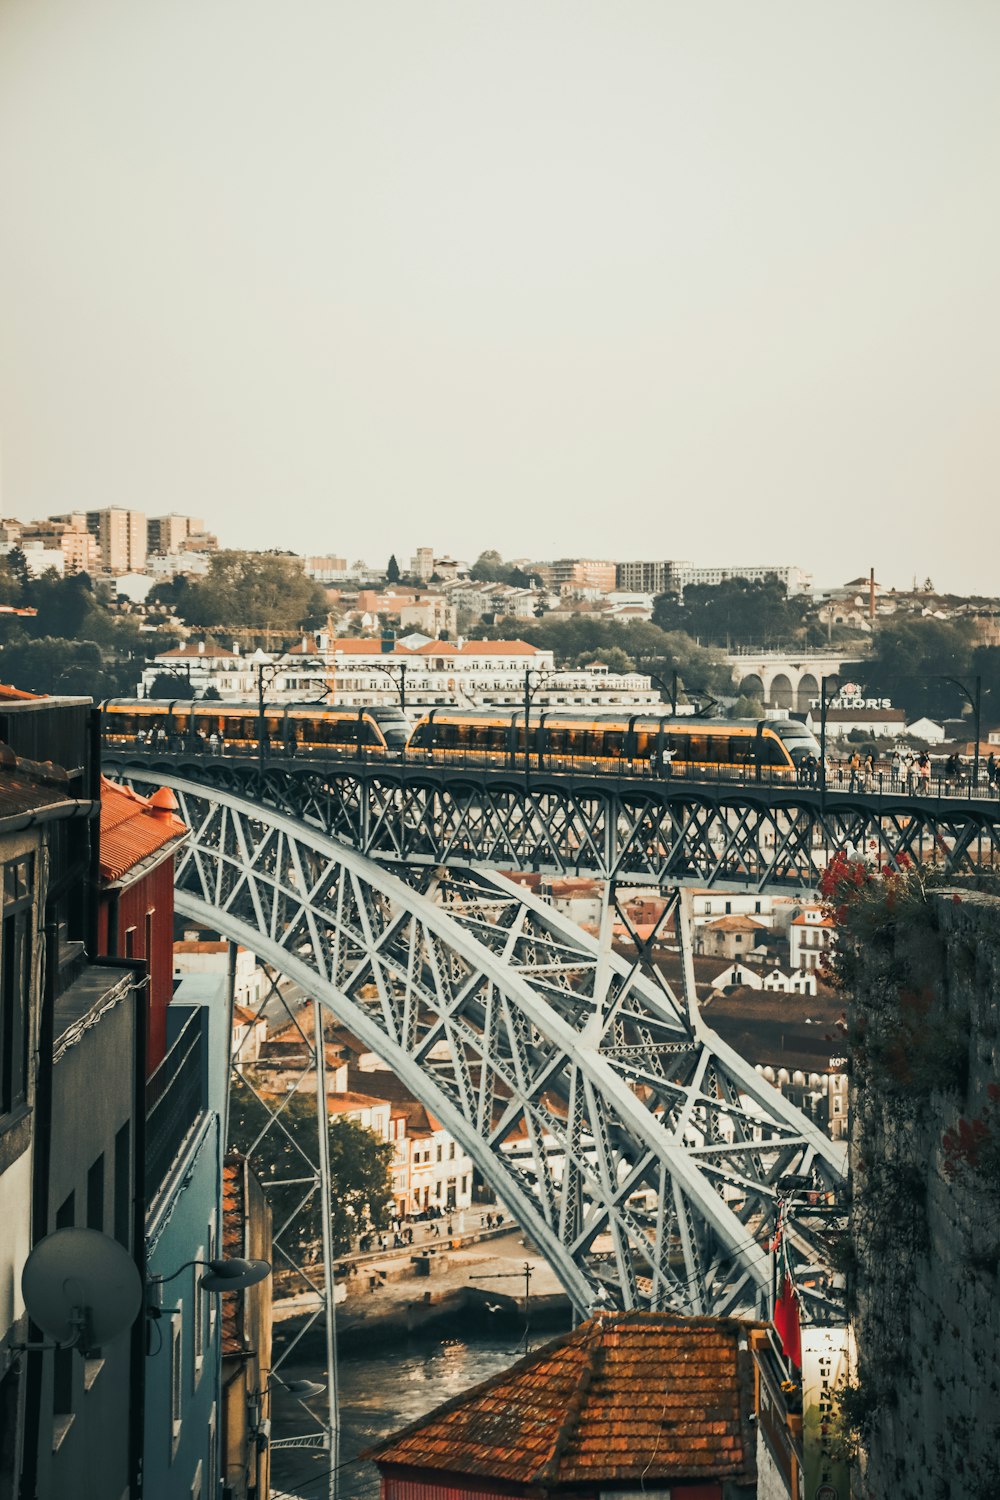 a train going over a bridge